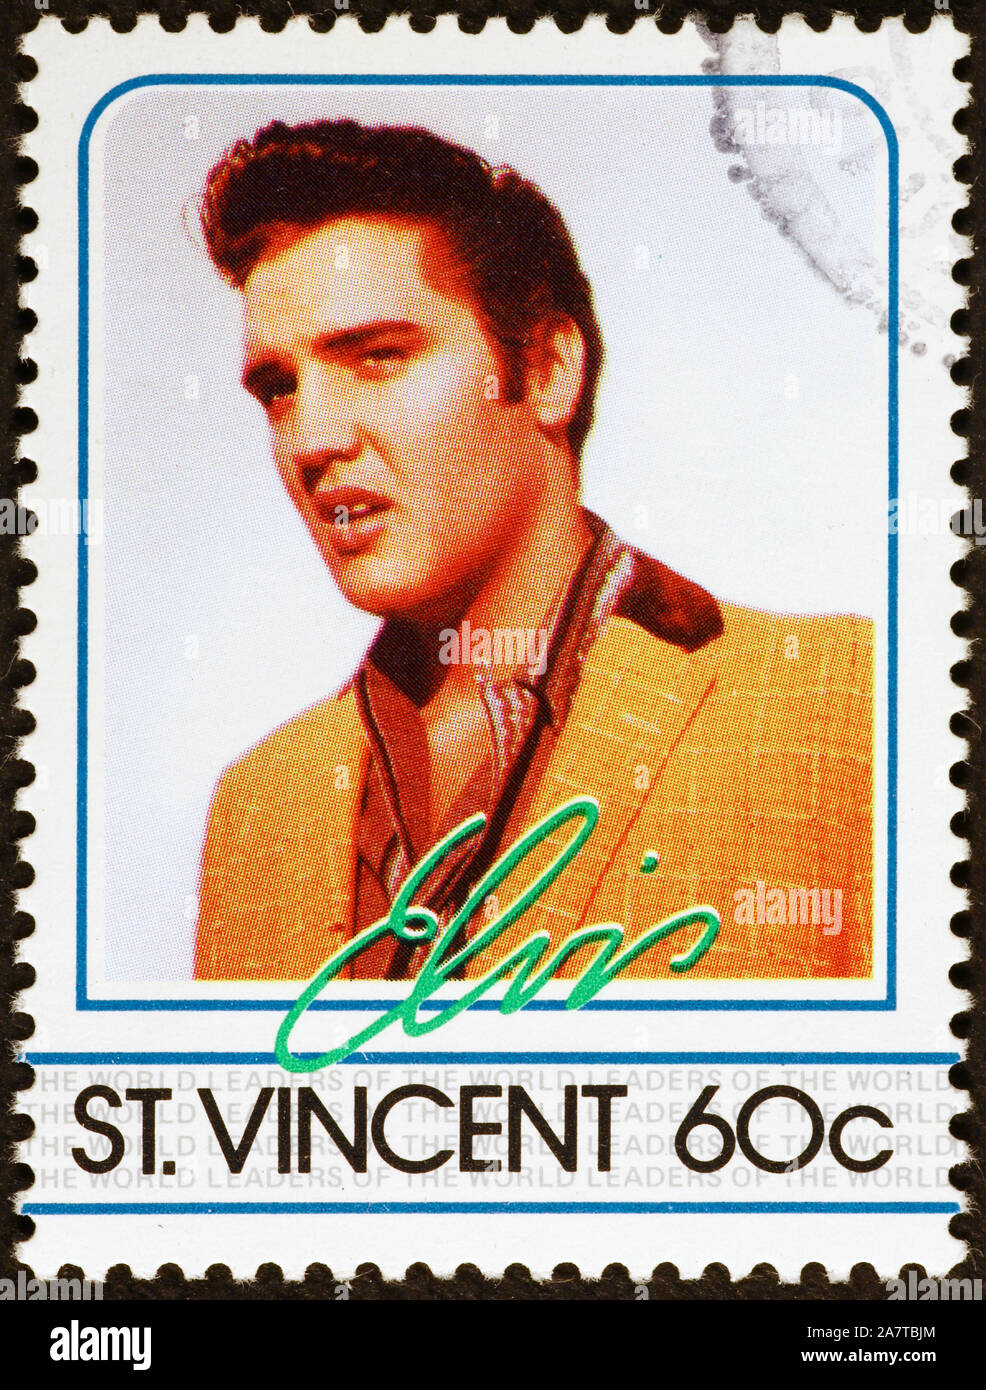 Portrait of Elvis Presley on postage stamp of Saint Vincent Stock Photo